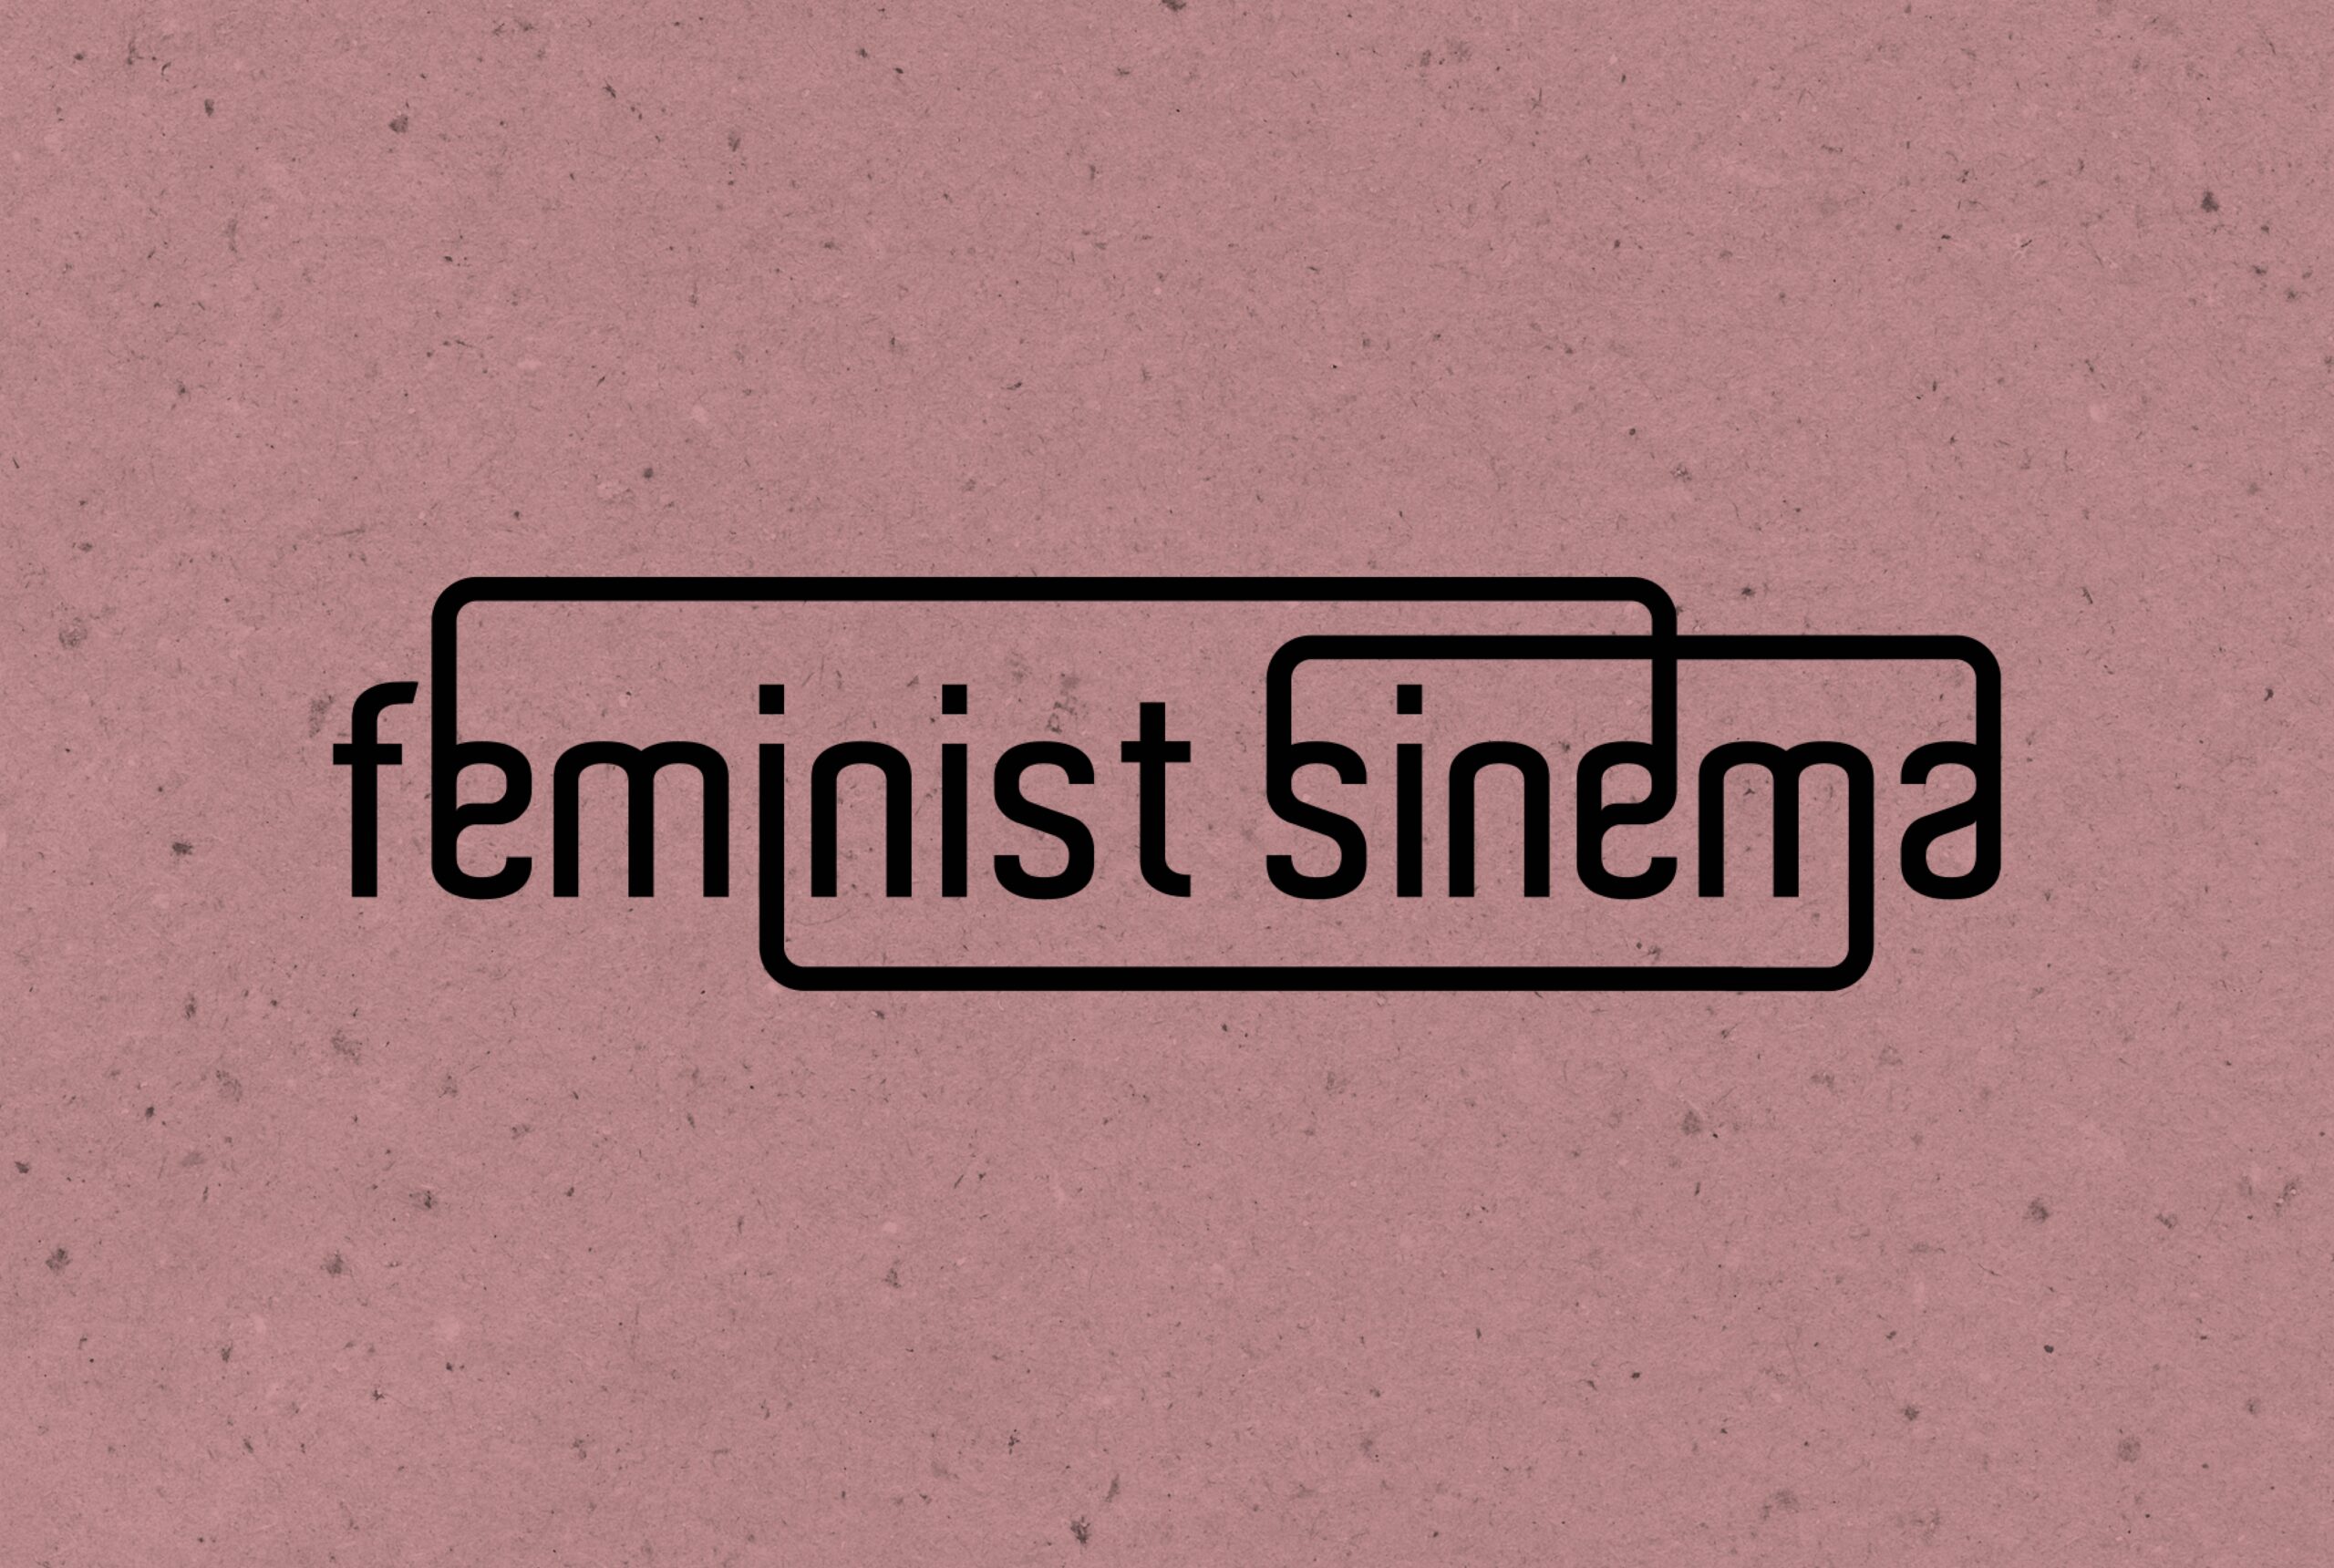 Feminist Sinema